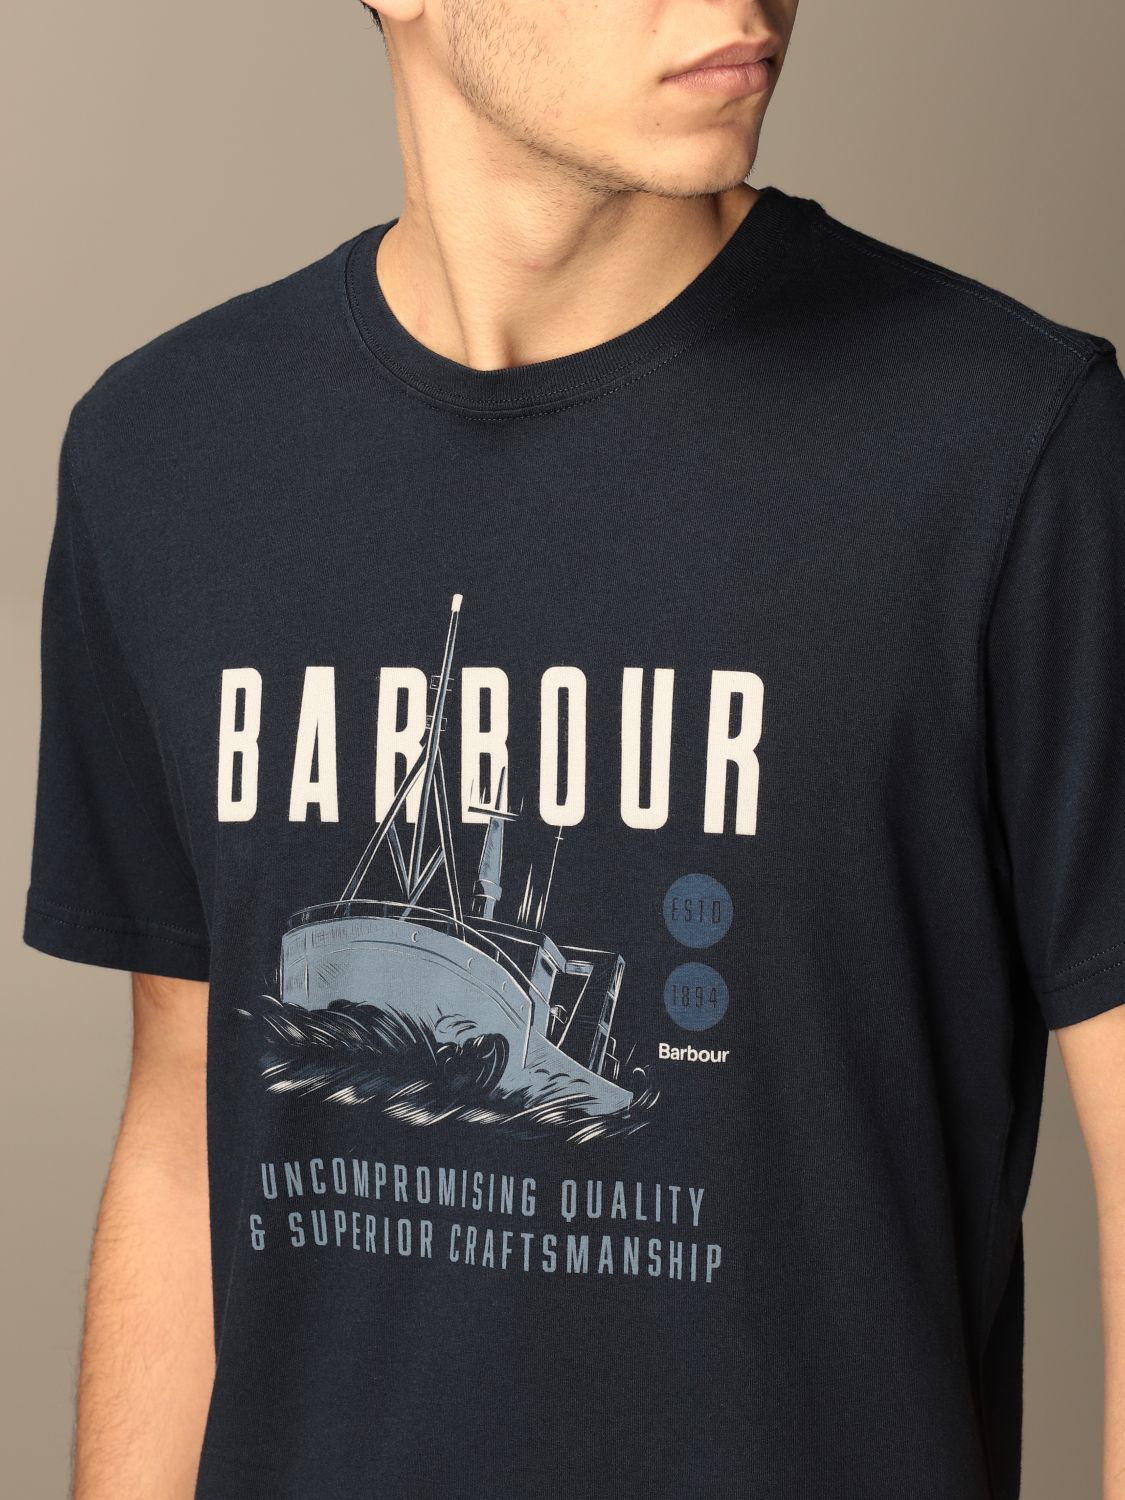 barbour tee shirts